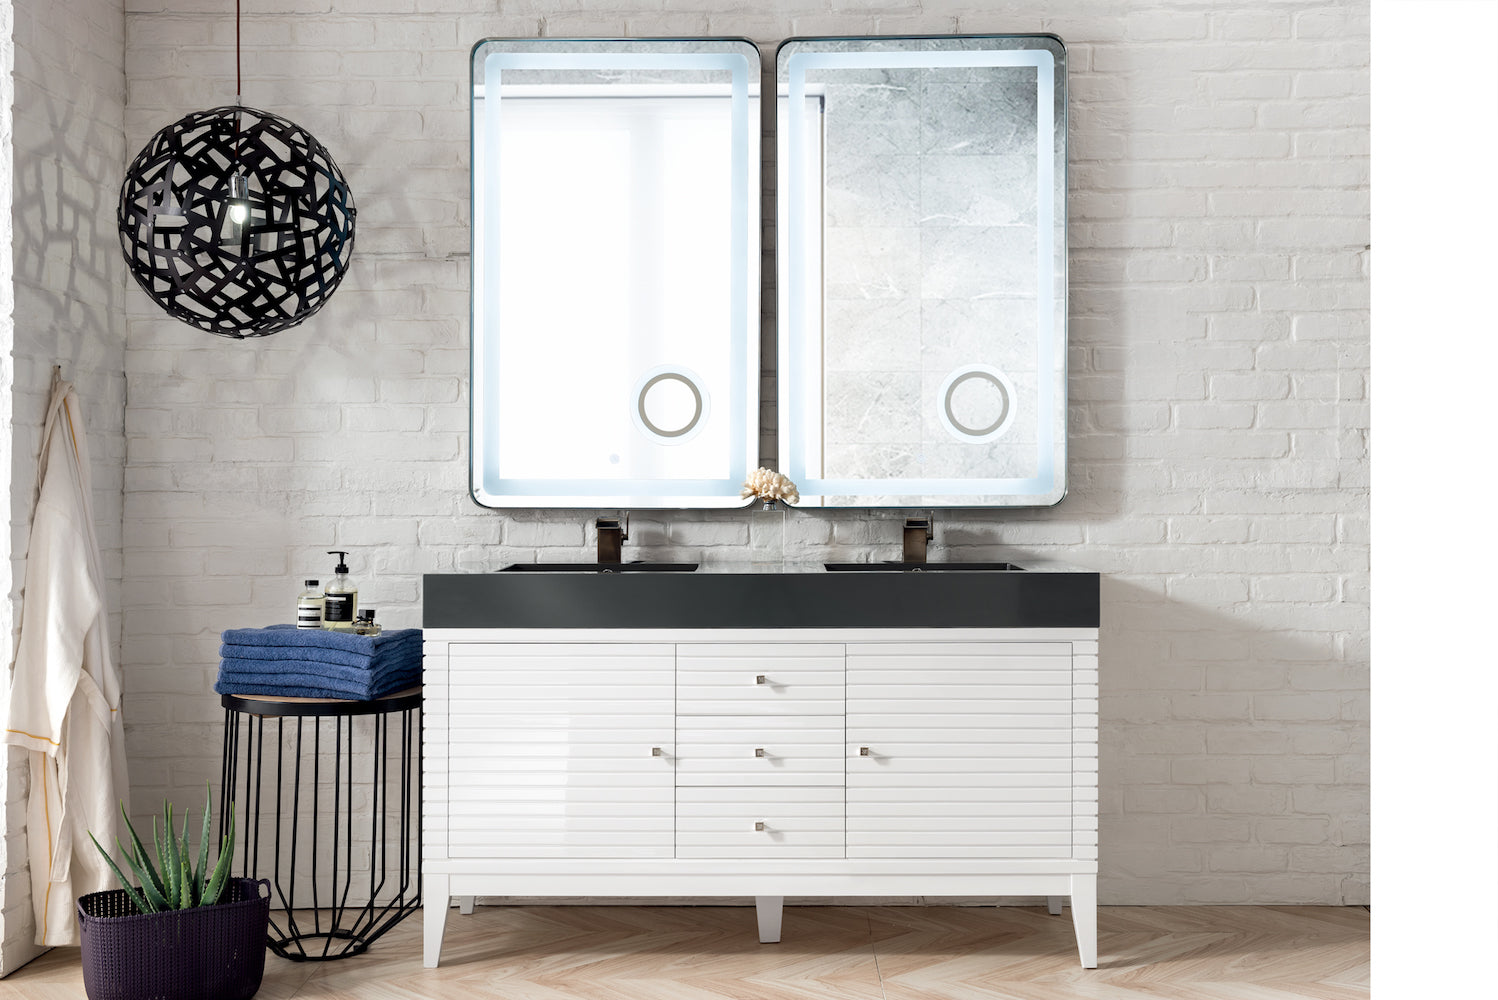 59" Linear Double Sink Bathroom Vanity, Glossy White